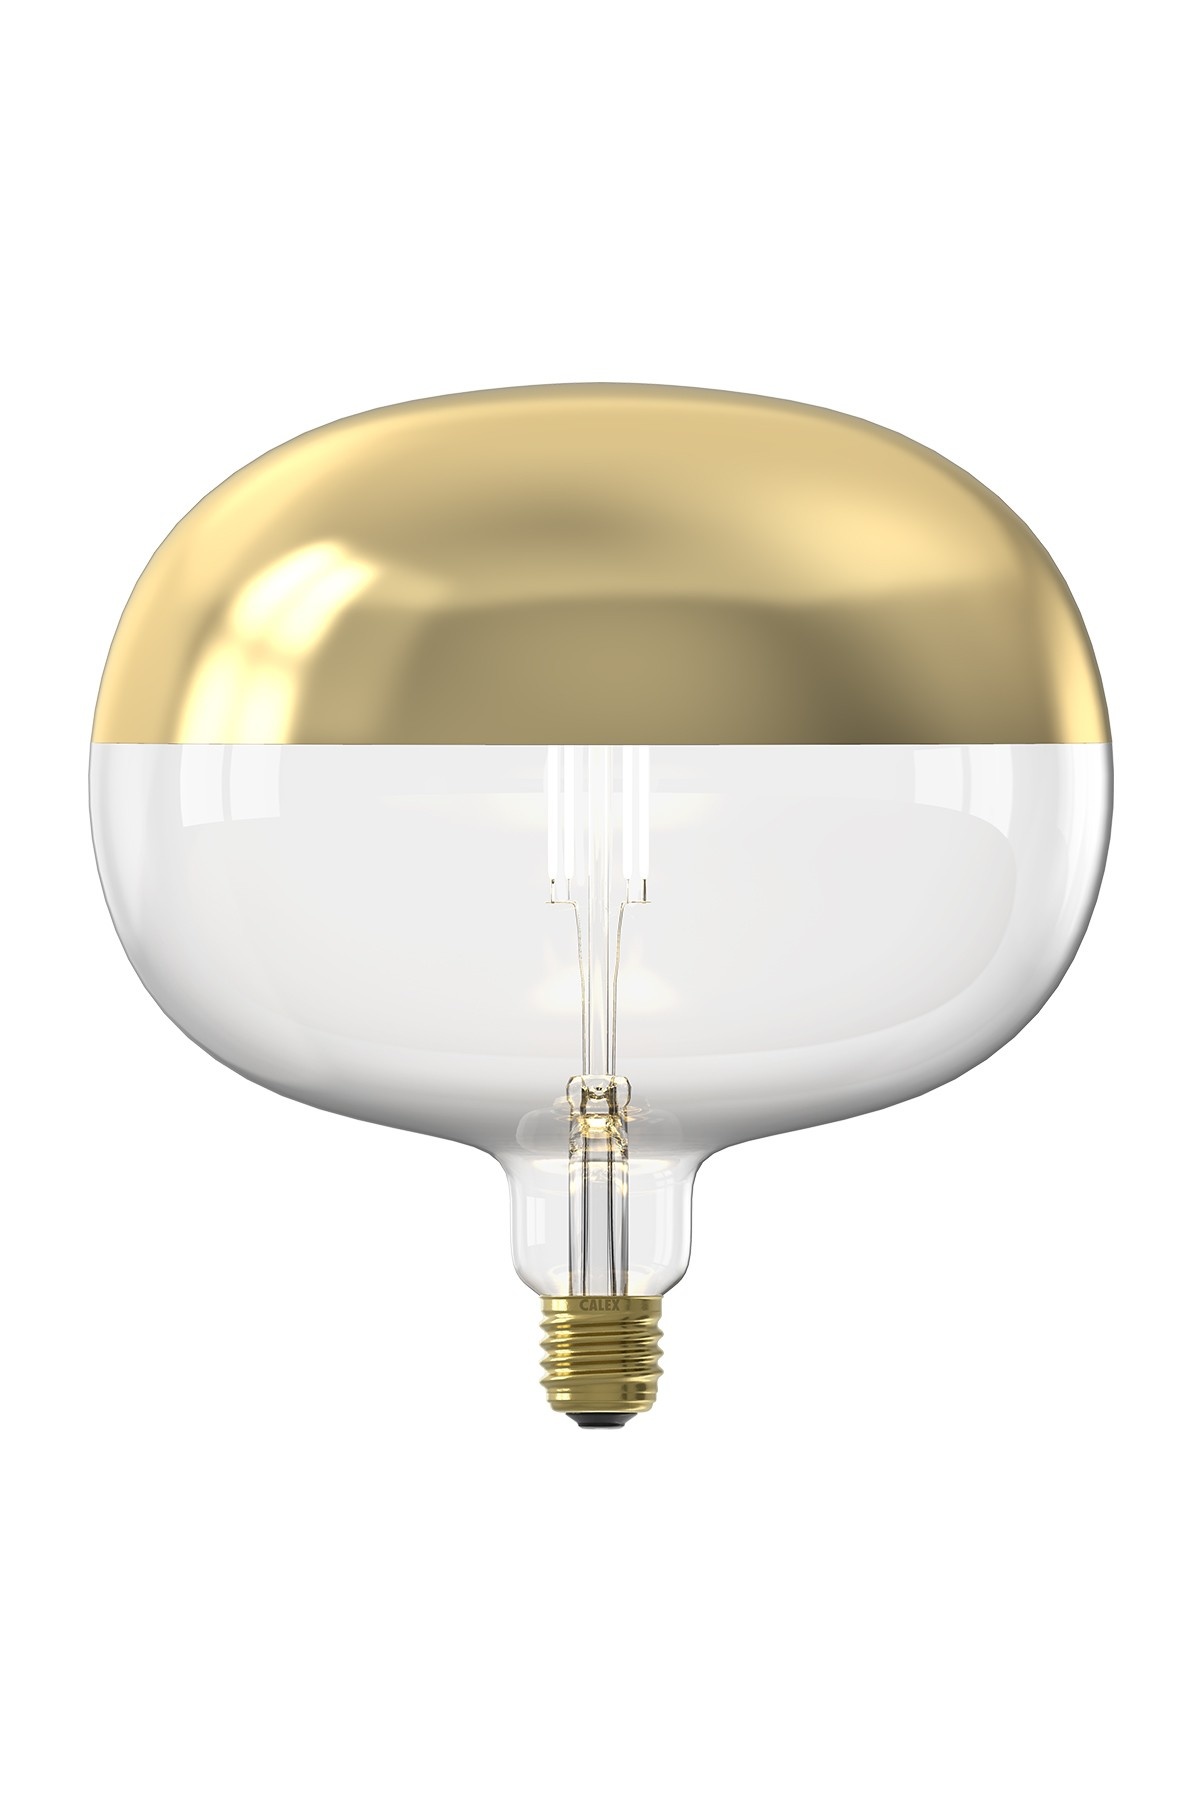 Calex Calex Boden Ø220 - E27 - 40 Lumen – Opal - Lampe Vintage